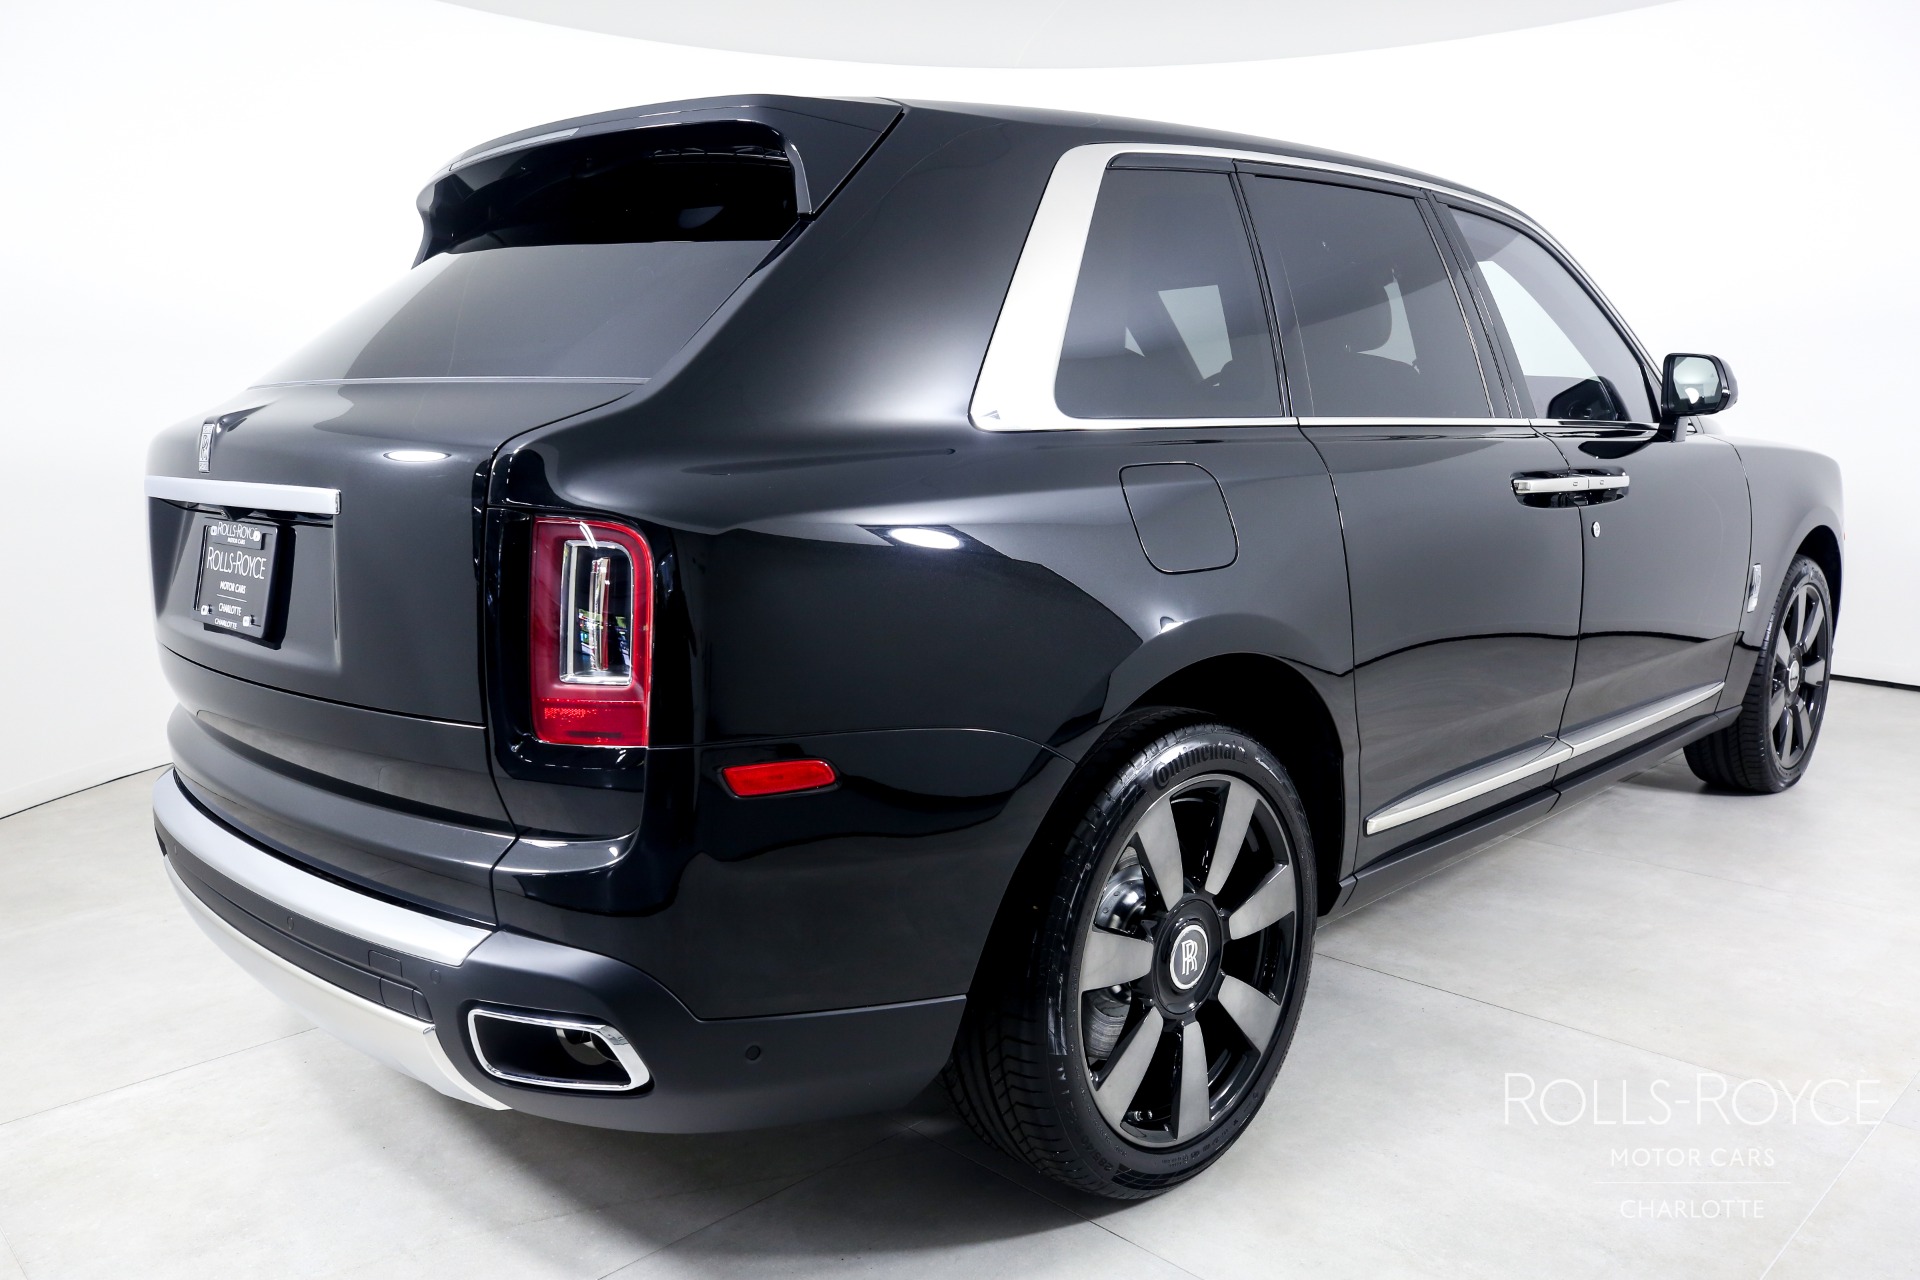 KLASSEN VIP - Manufacturer - Rolls Royce - Model - Cullinan